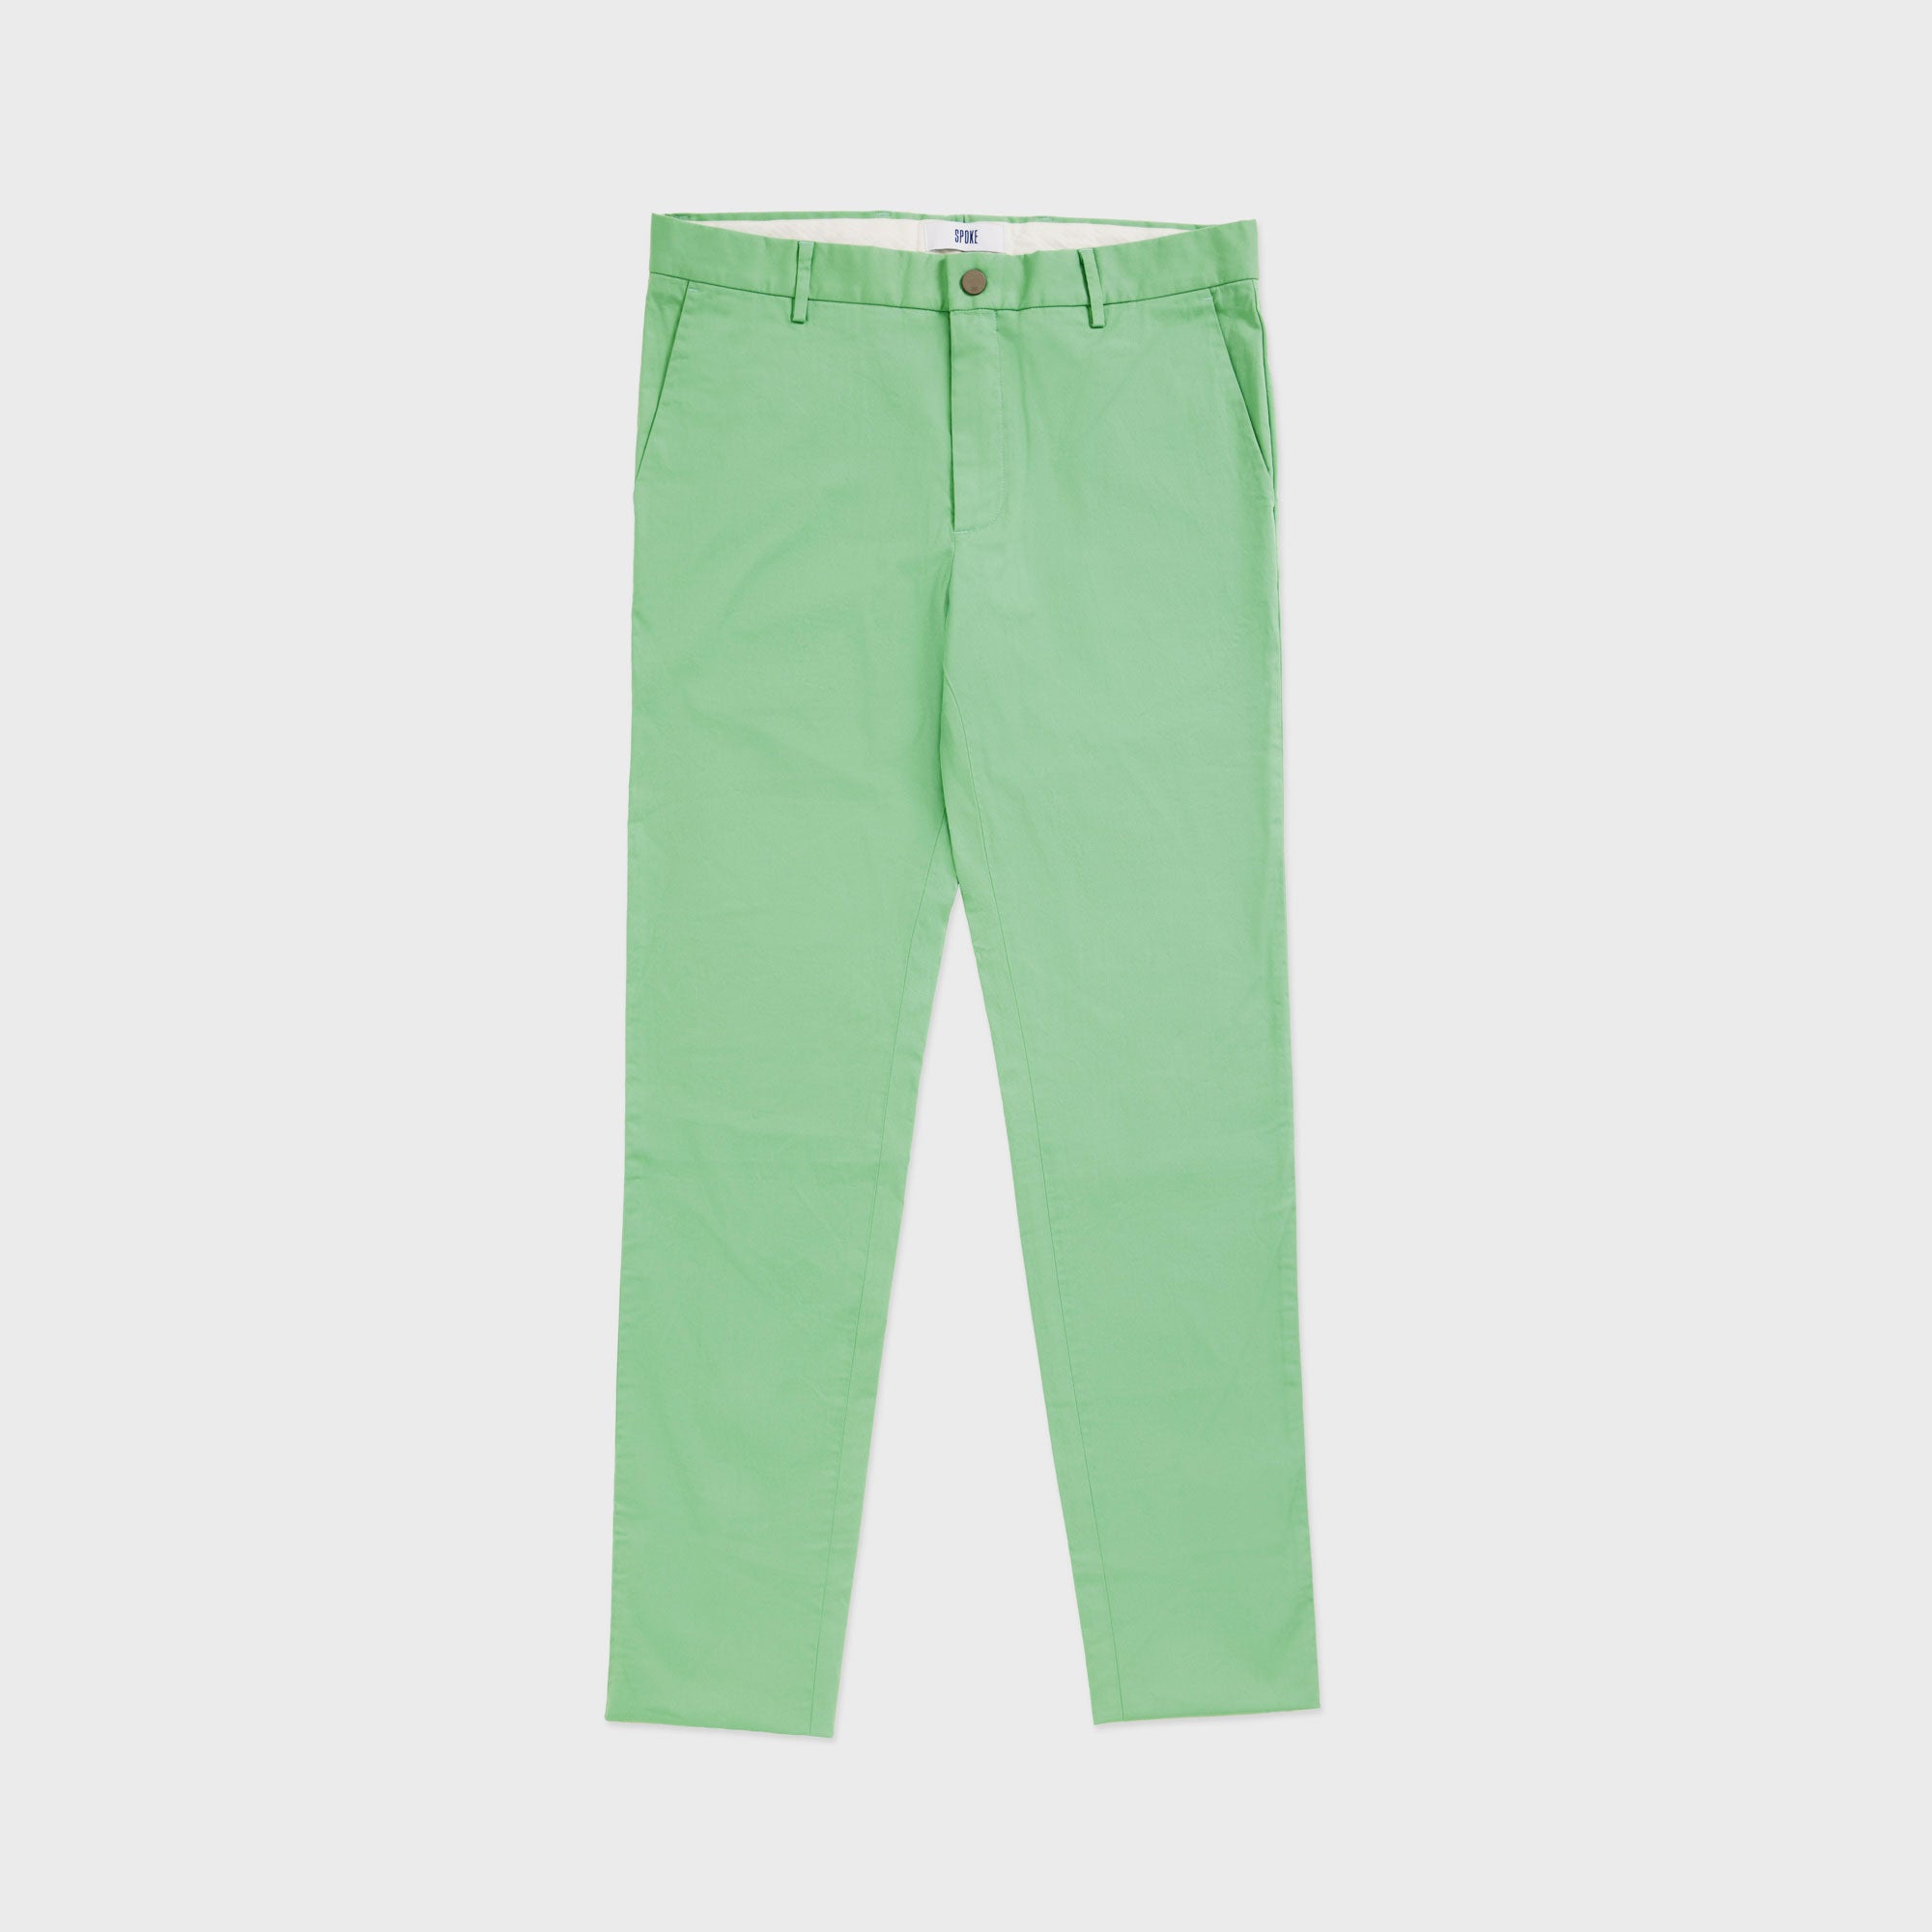 Mint Green Summer Sharps -Everyday Men's Custom Fit Chino Pants - SPOKE ...